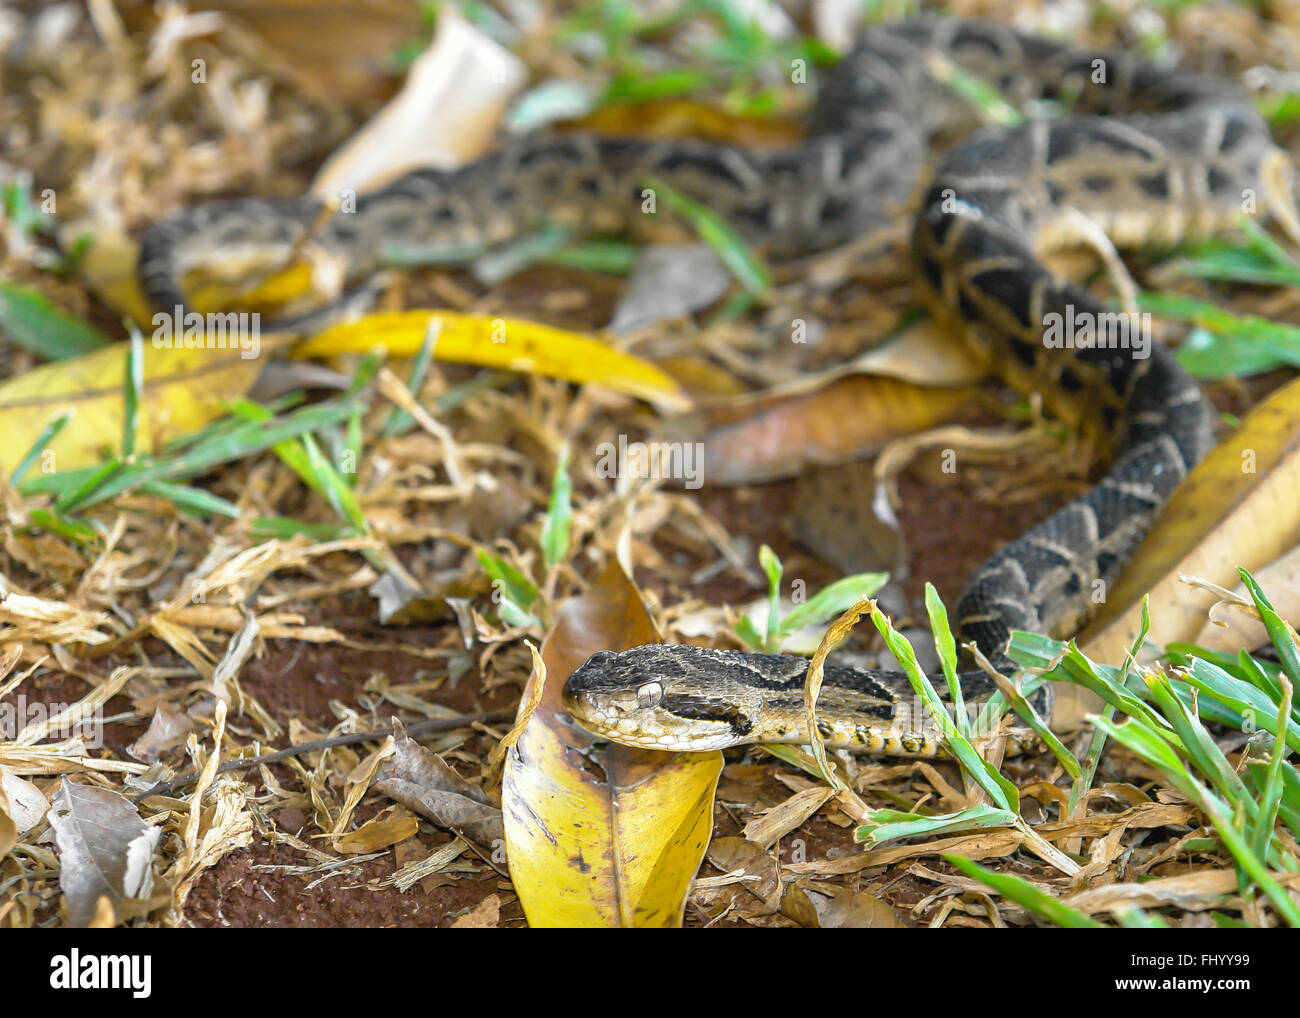 Small Yarara dangerous snake Stock Photo